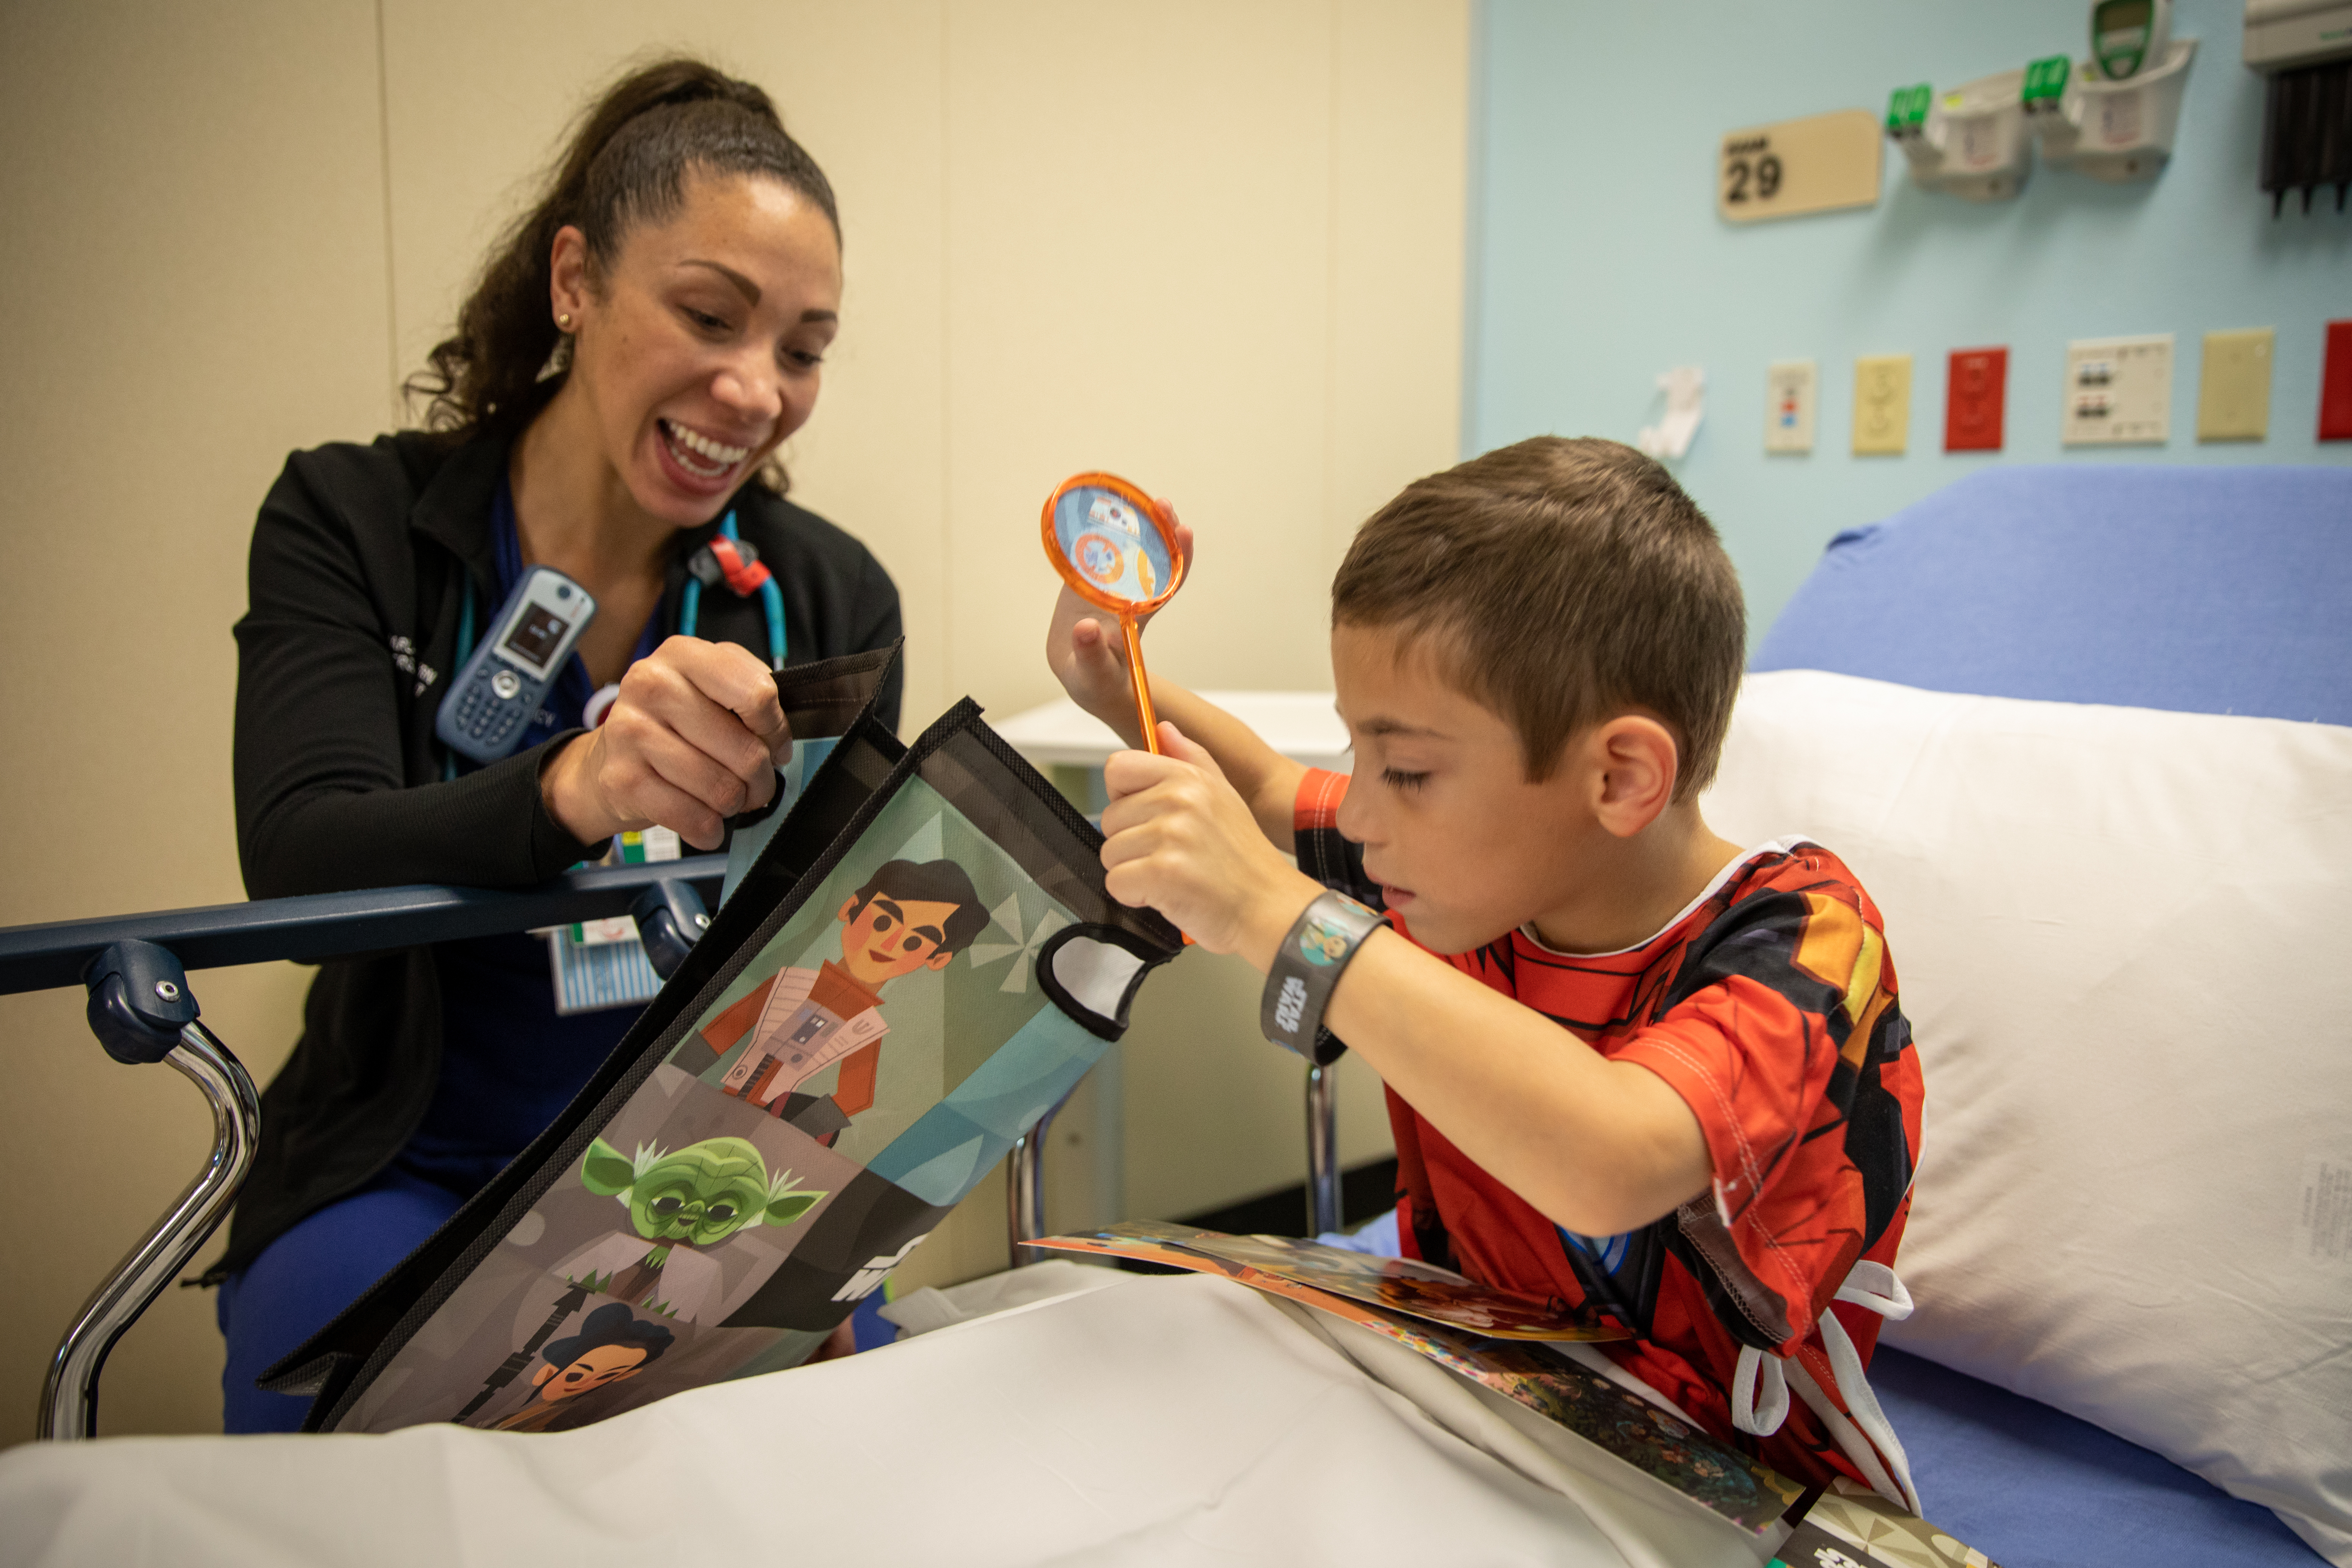 The Disney Children's Hospitals Program Brings Magic to Children and Families